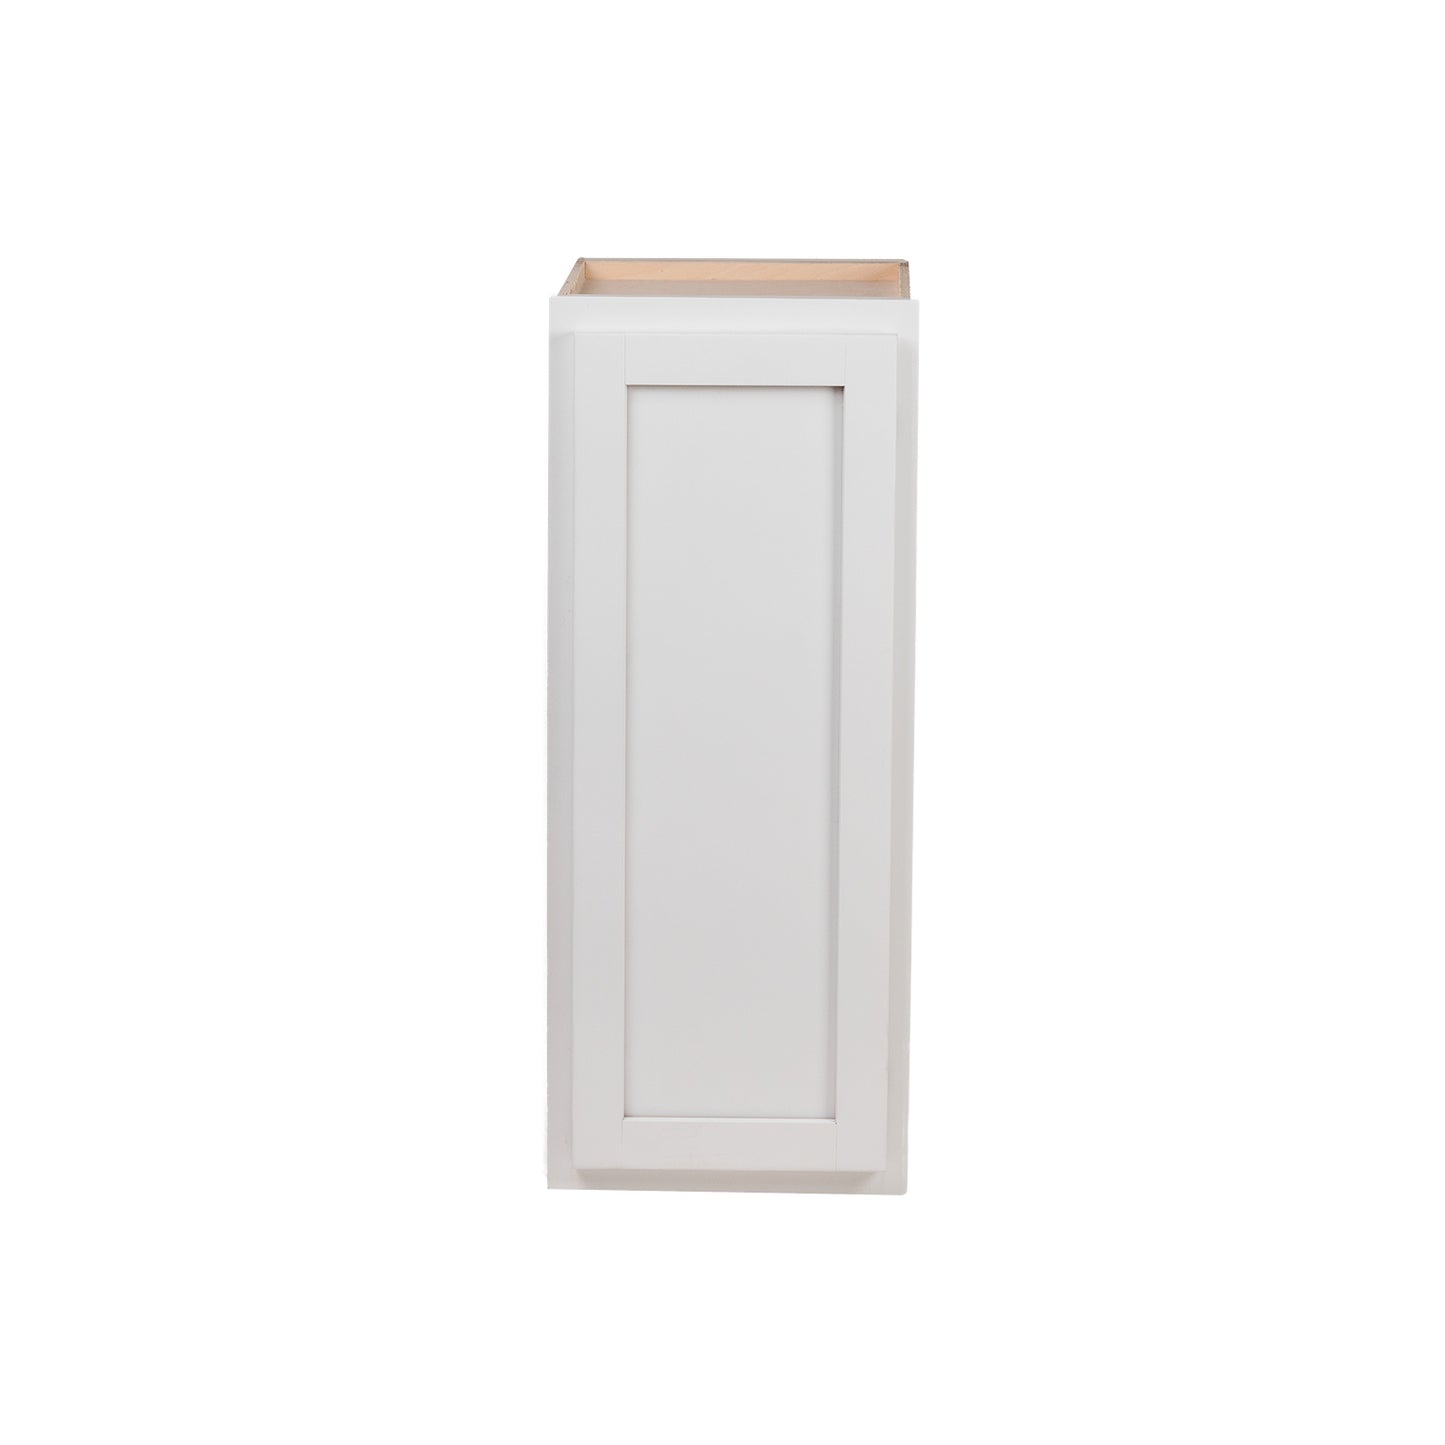 Quicklock RTA (Ready-to-Assemble) Pure White 12"Wx42"Hx12"D Wall Cabinet